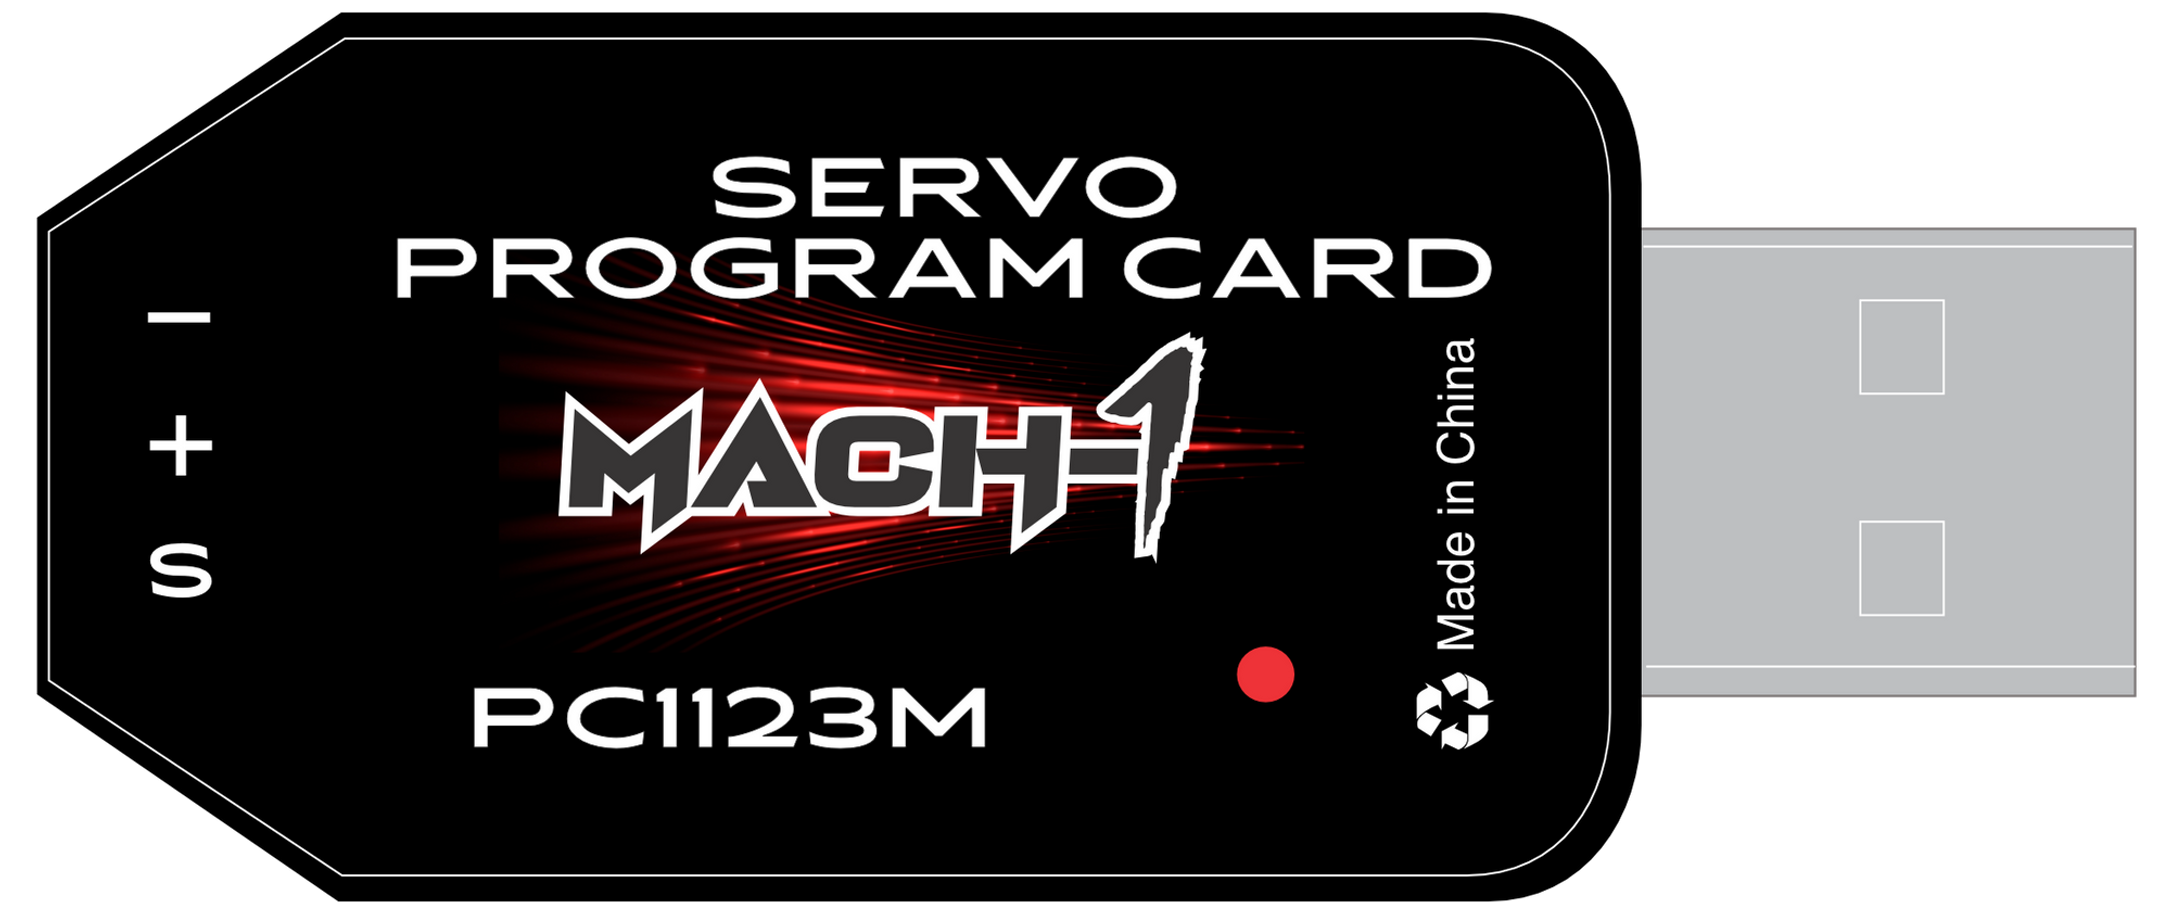 Mach-1 Racing servo program card - [Sunshine-Coast] - Techtonic Hobbies - [RC-Car] - [Scale-Model]